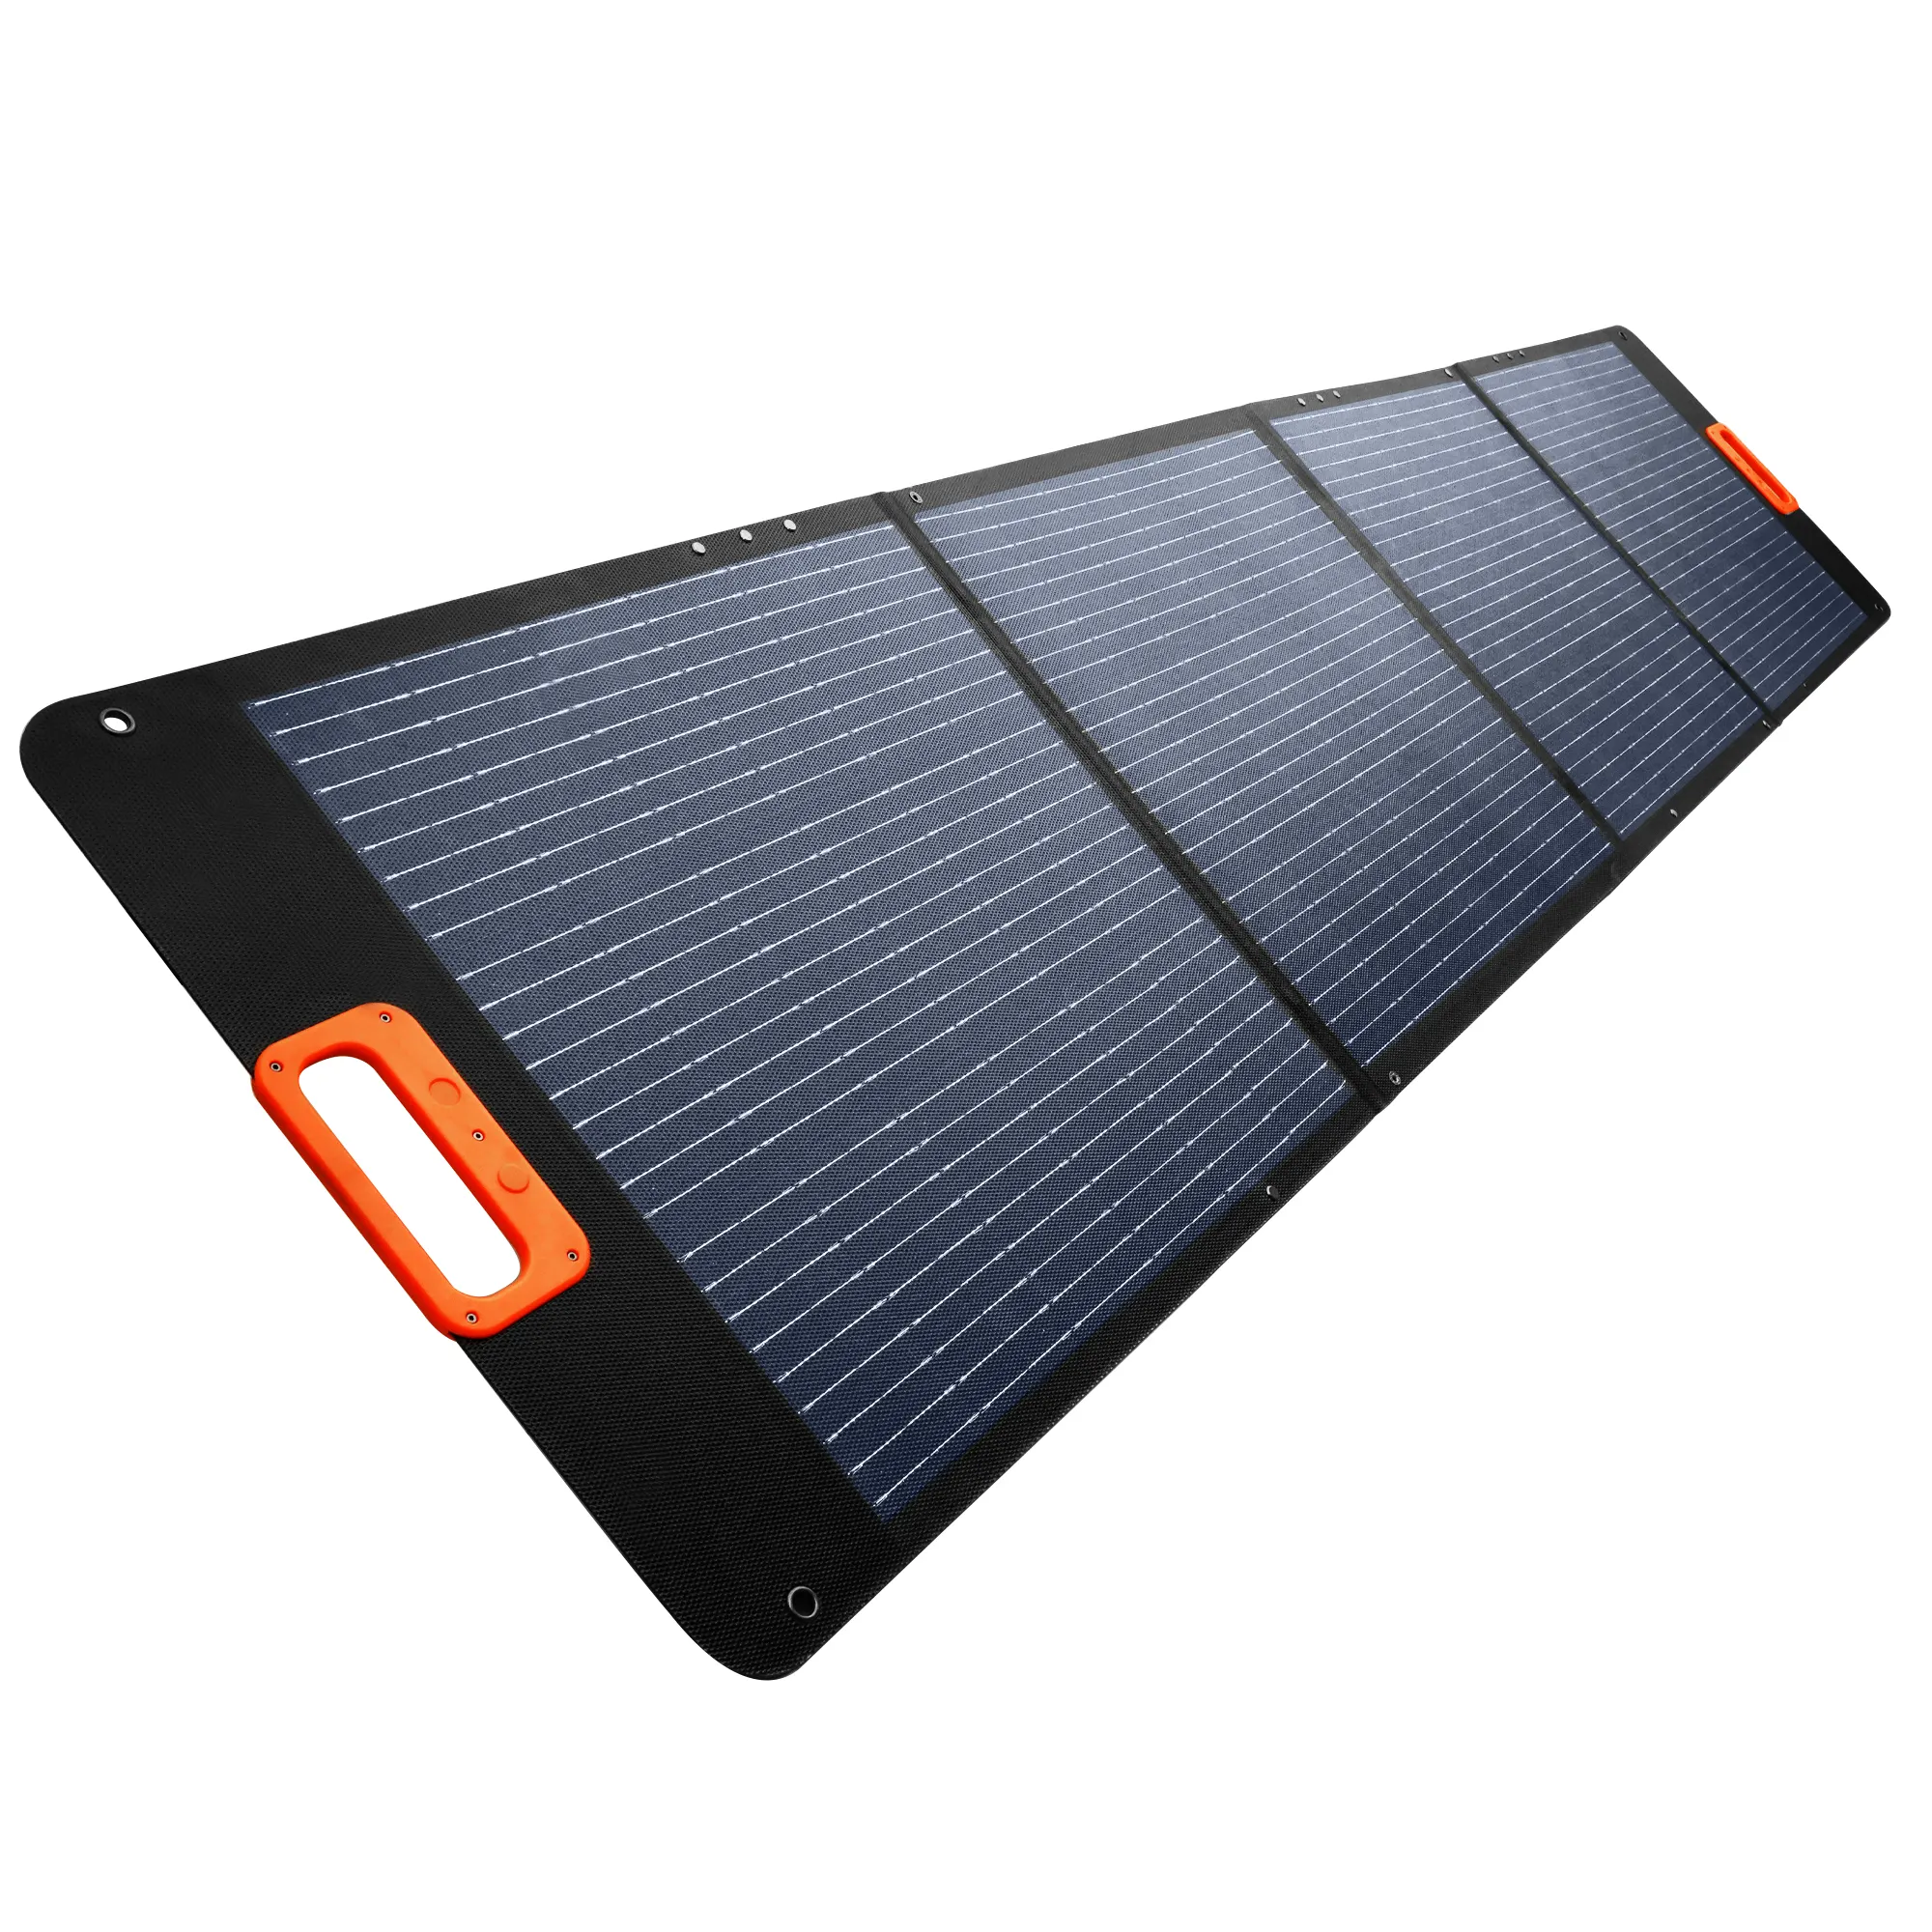 Für Camping im Freien Mono kristallines Silizium 100W 200W 300W 400W Photovoltaik-Module Faltbares Solarpanel-Ladegerät